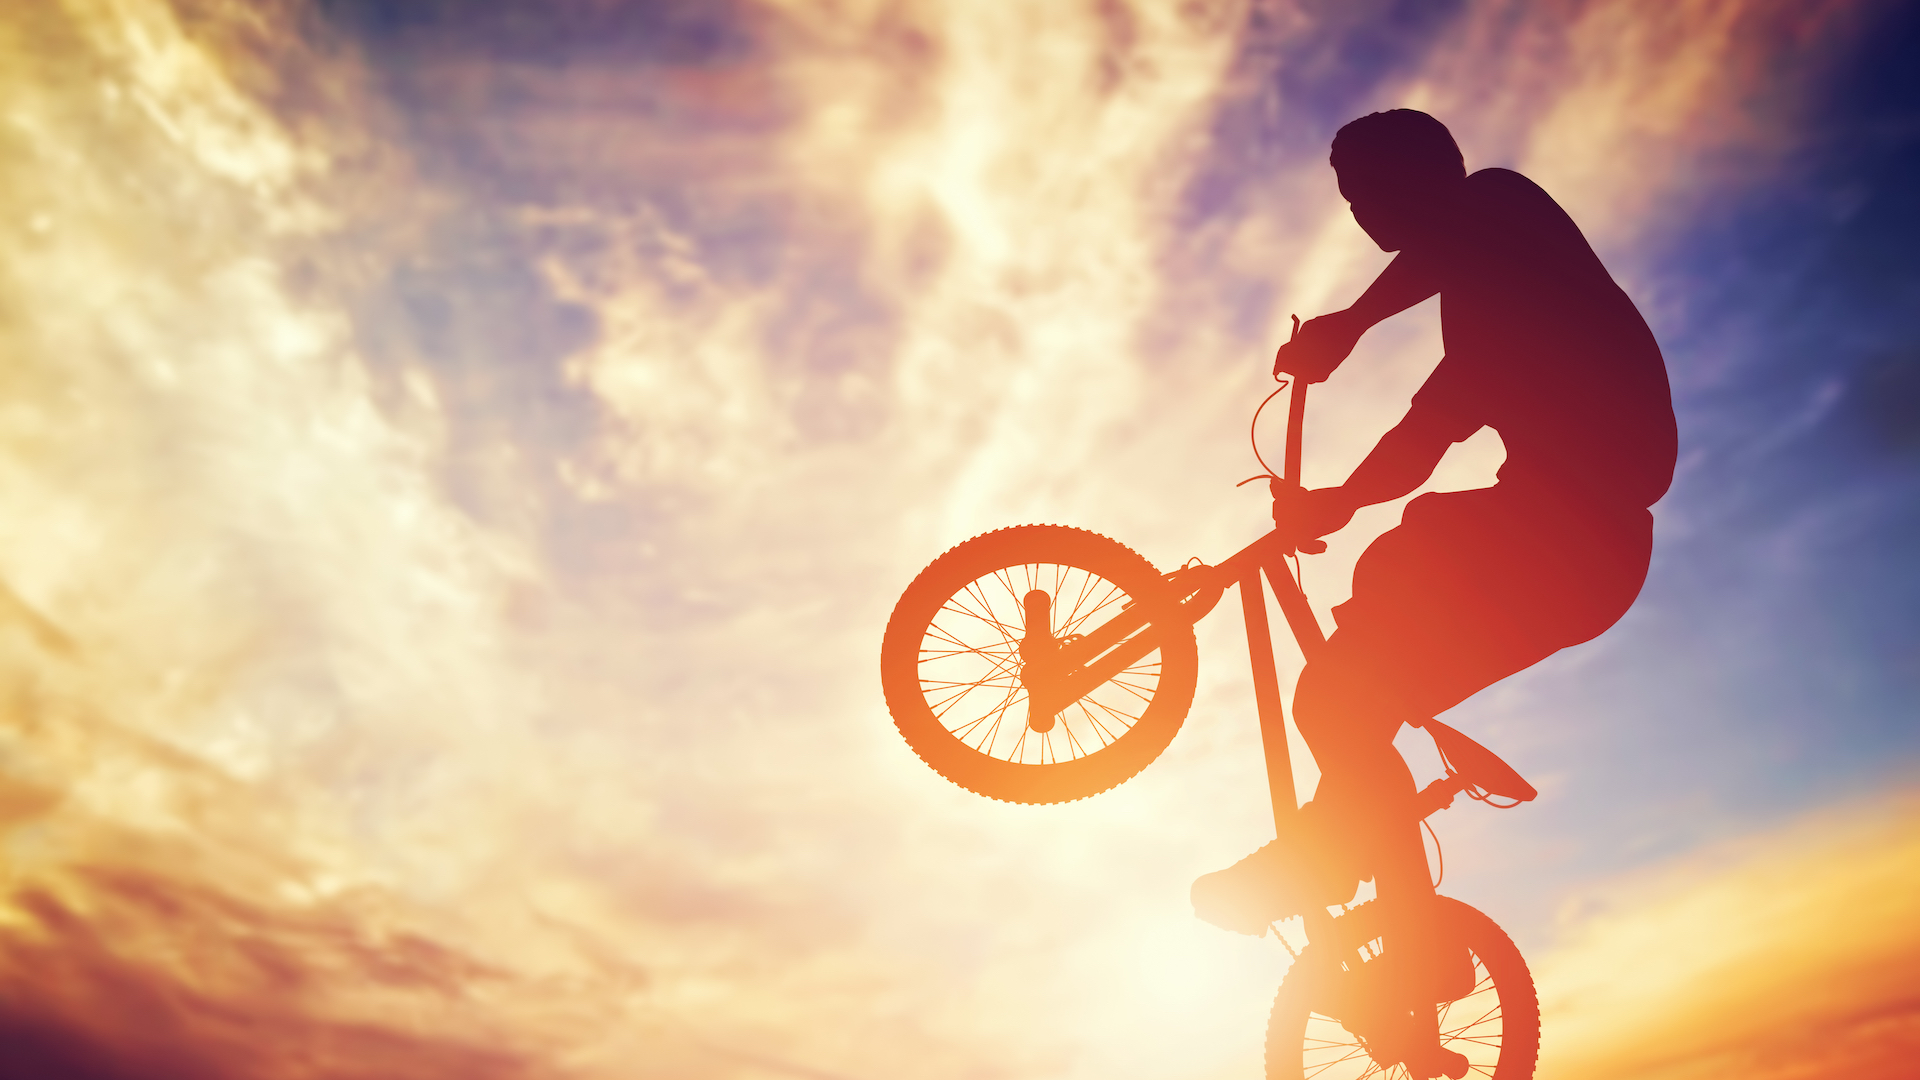 Man riding a BMX bike against the sunset